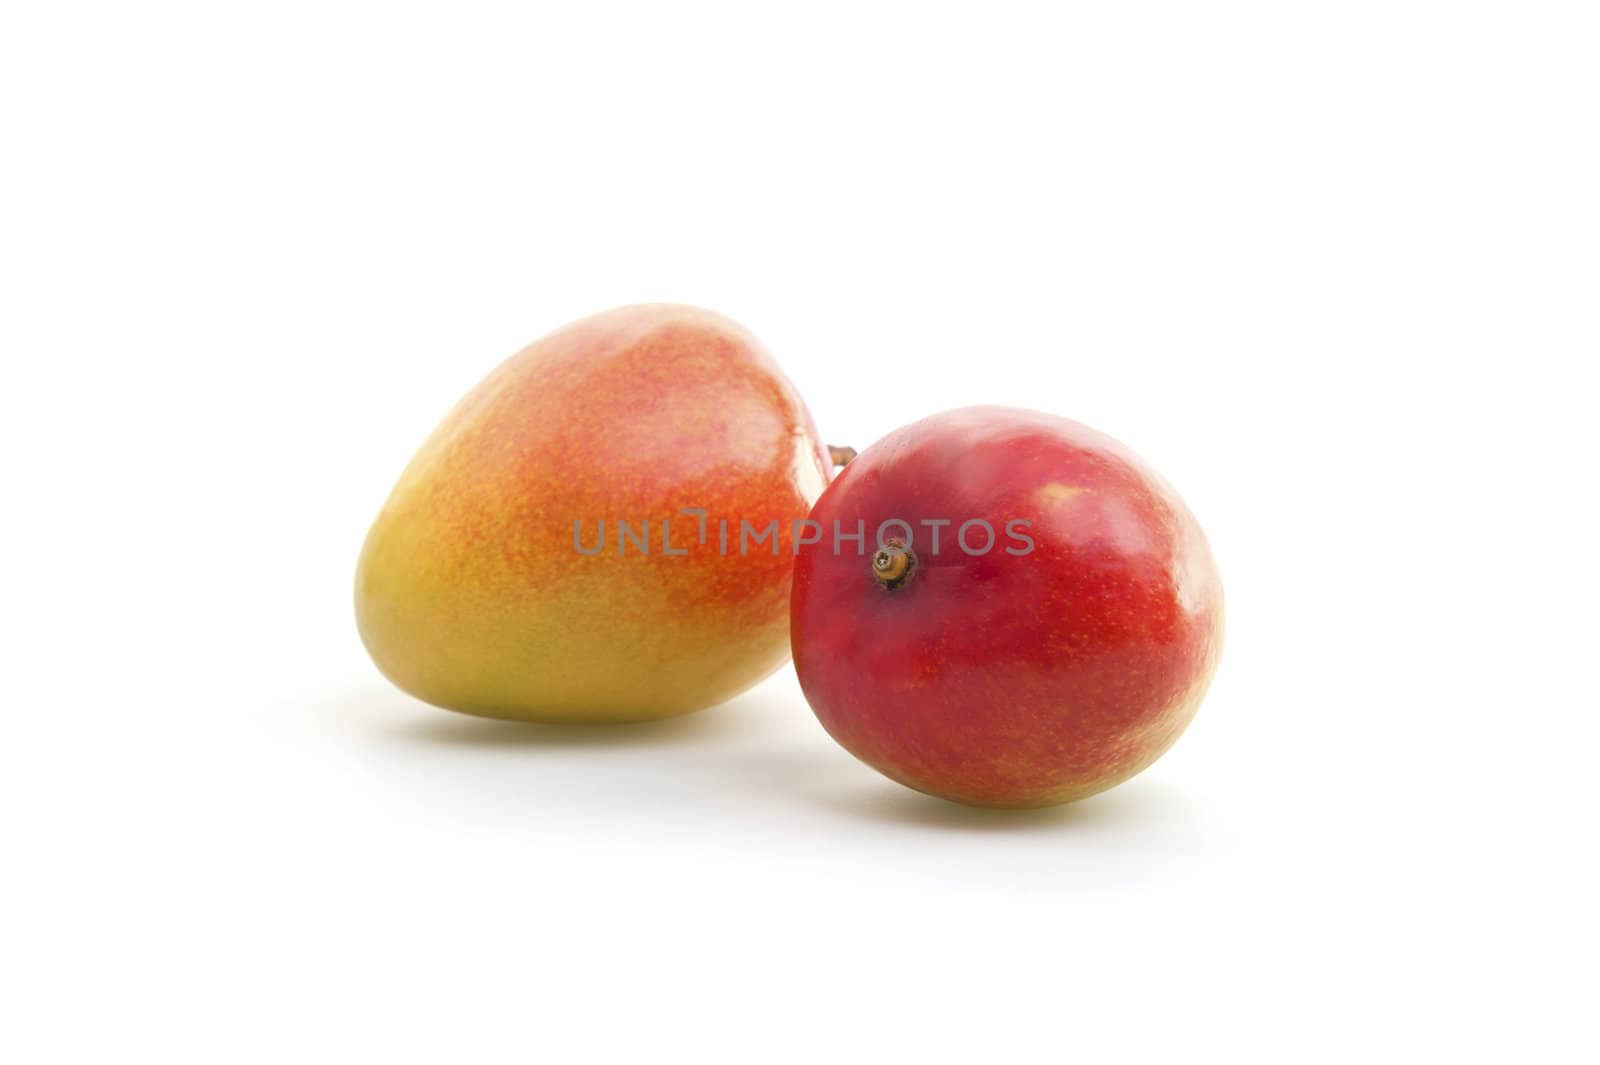 Fresh mangos photographed on a white background.